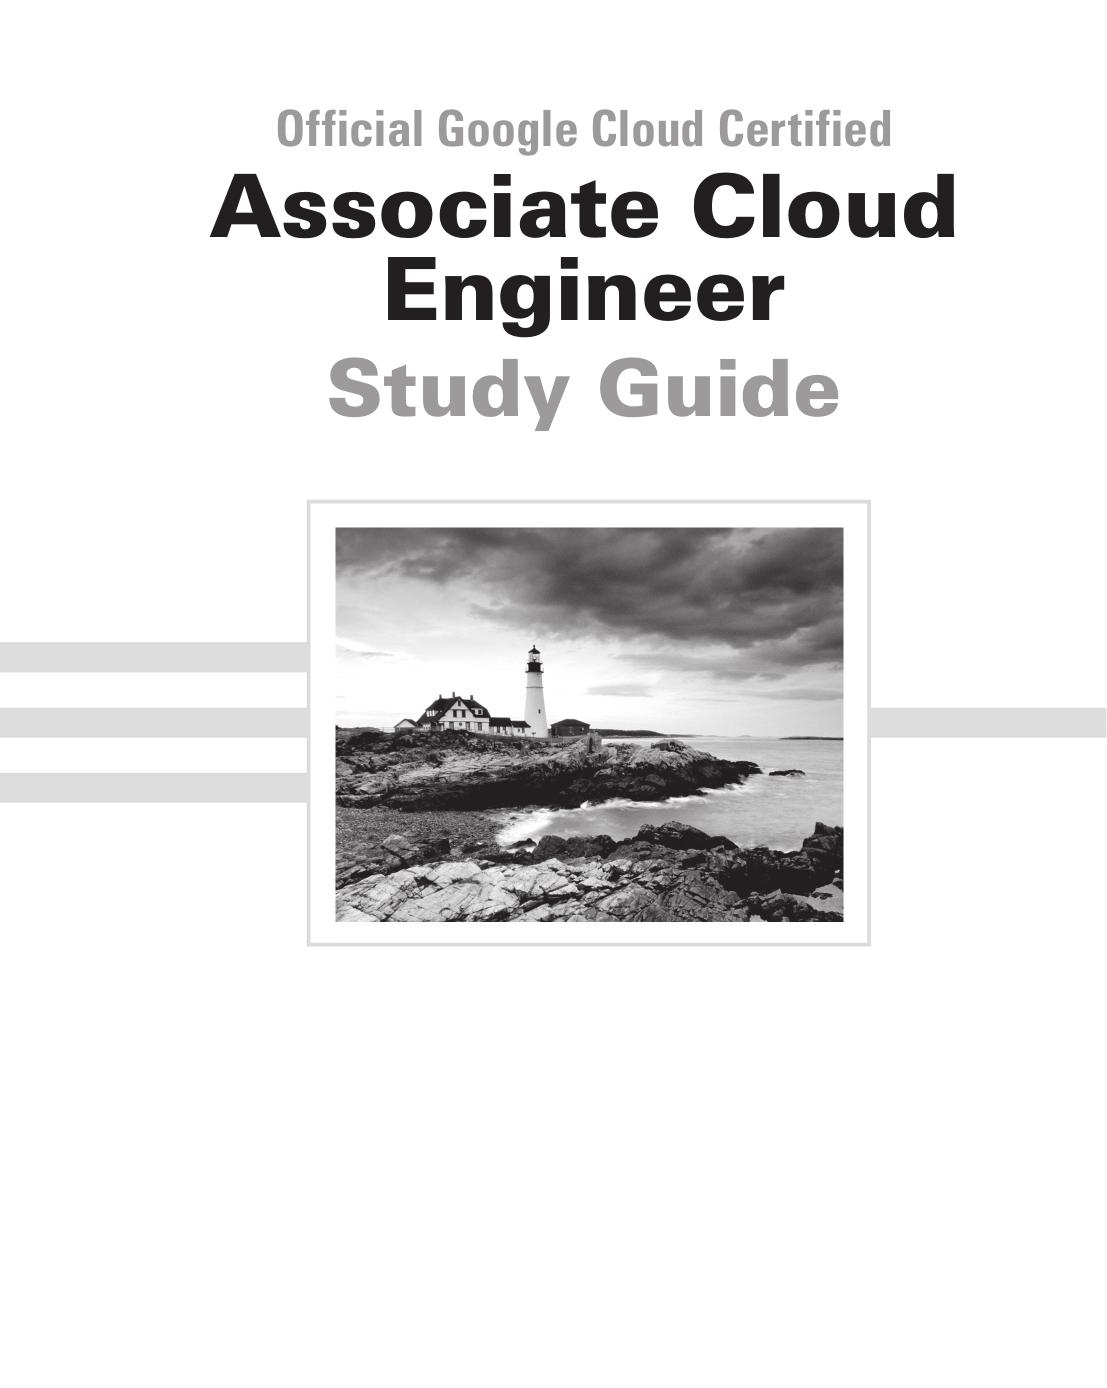 Official Google Cloud Certified Associate Cloud Engineer Study Guide by Dan Sullivan